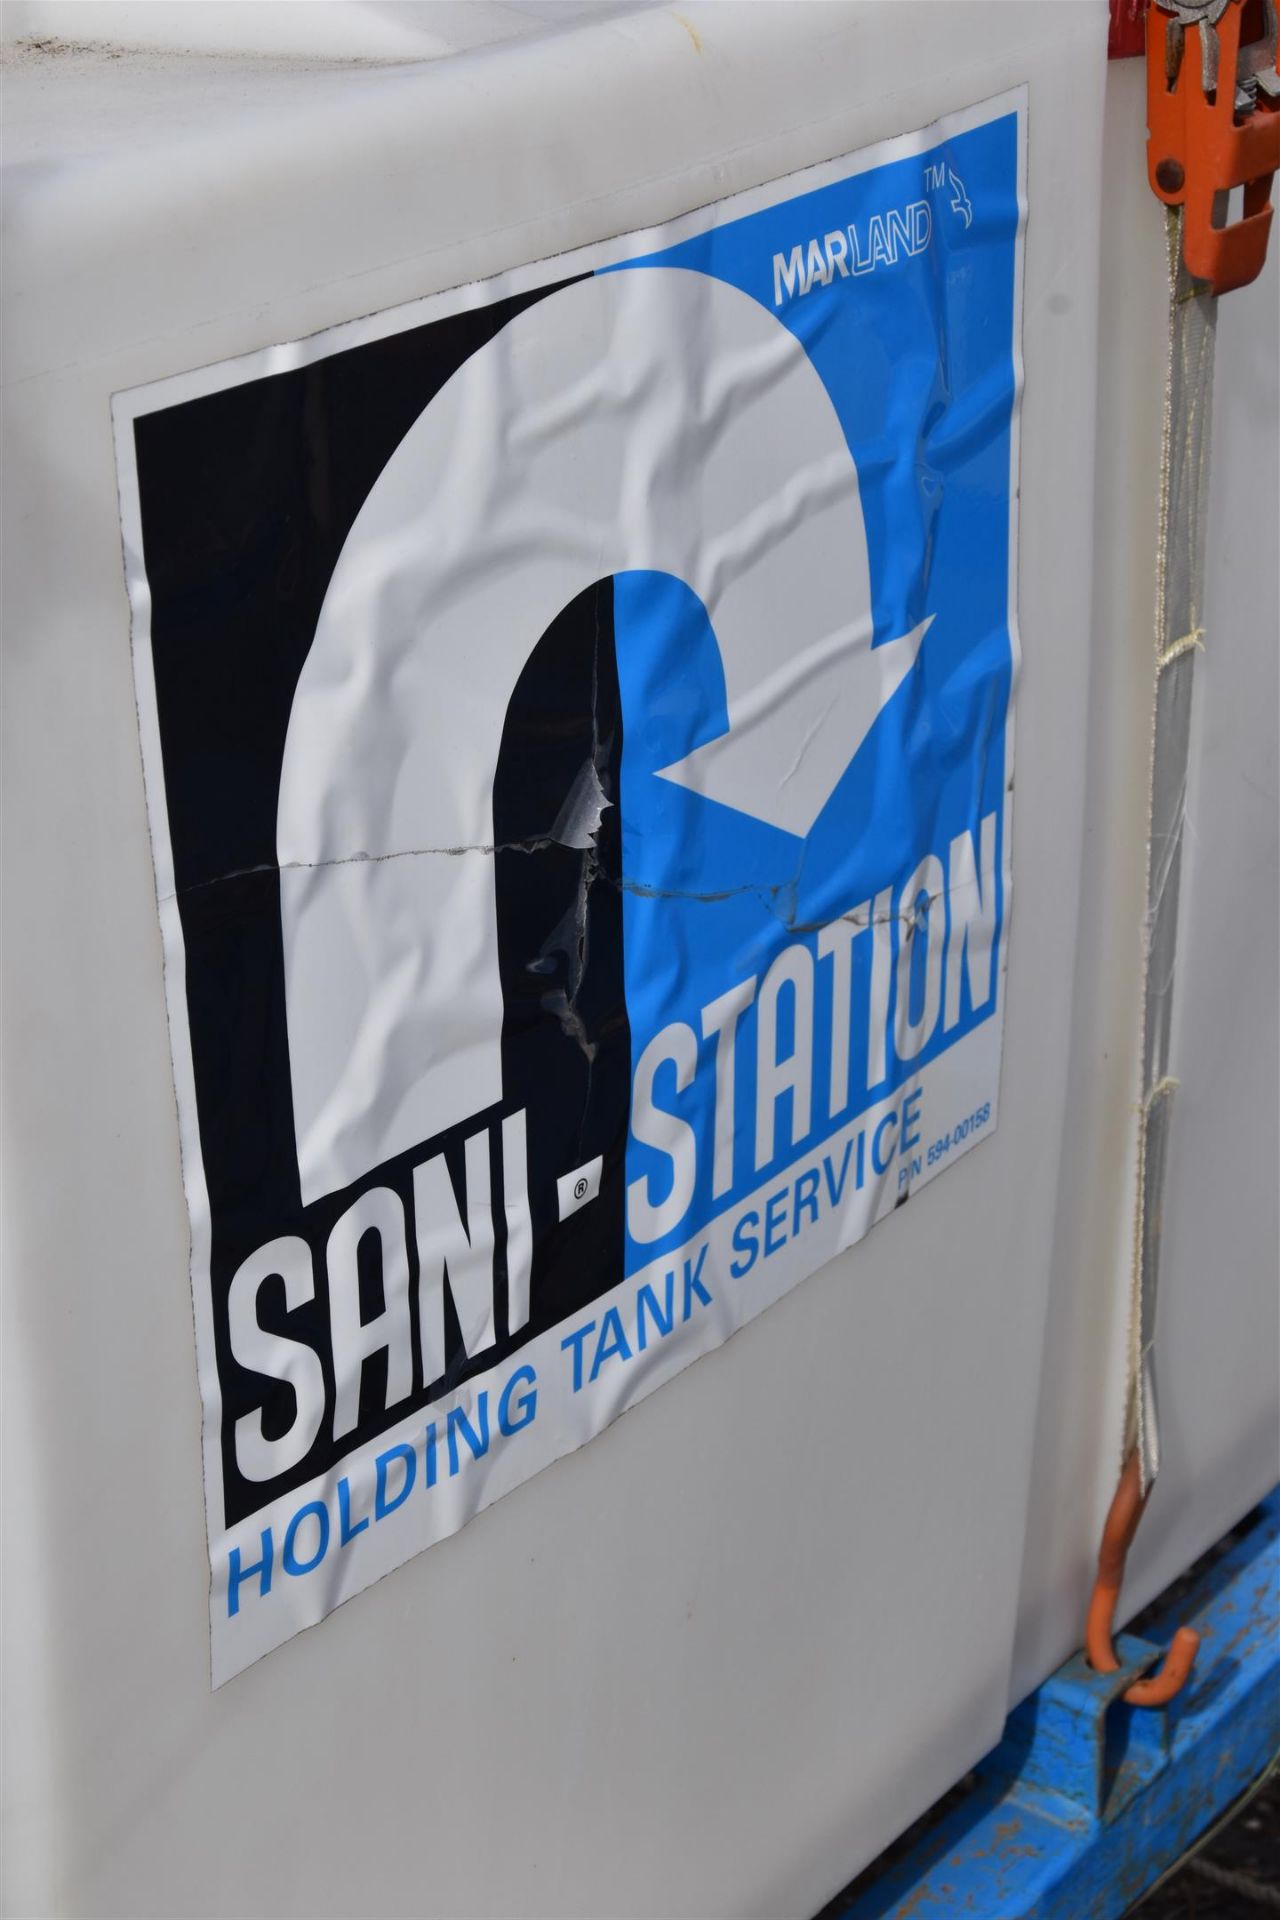 Sani-Station 100 Gallon Tank Trailer - Image 7 of 7